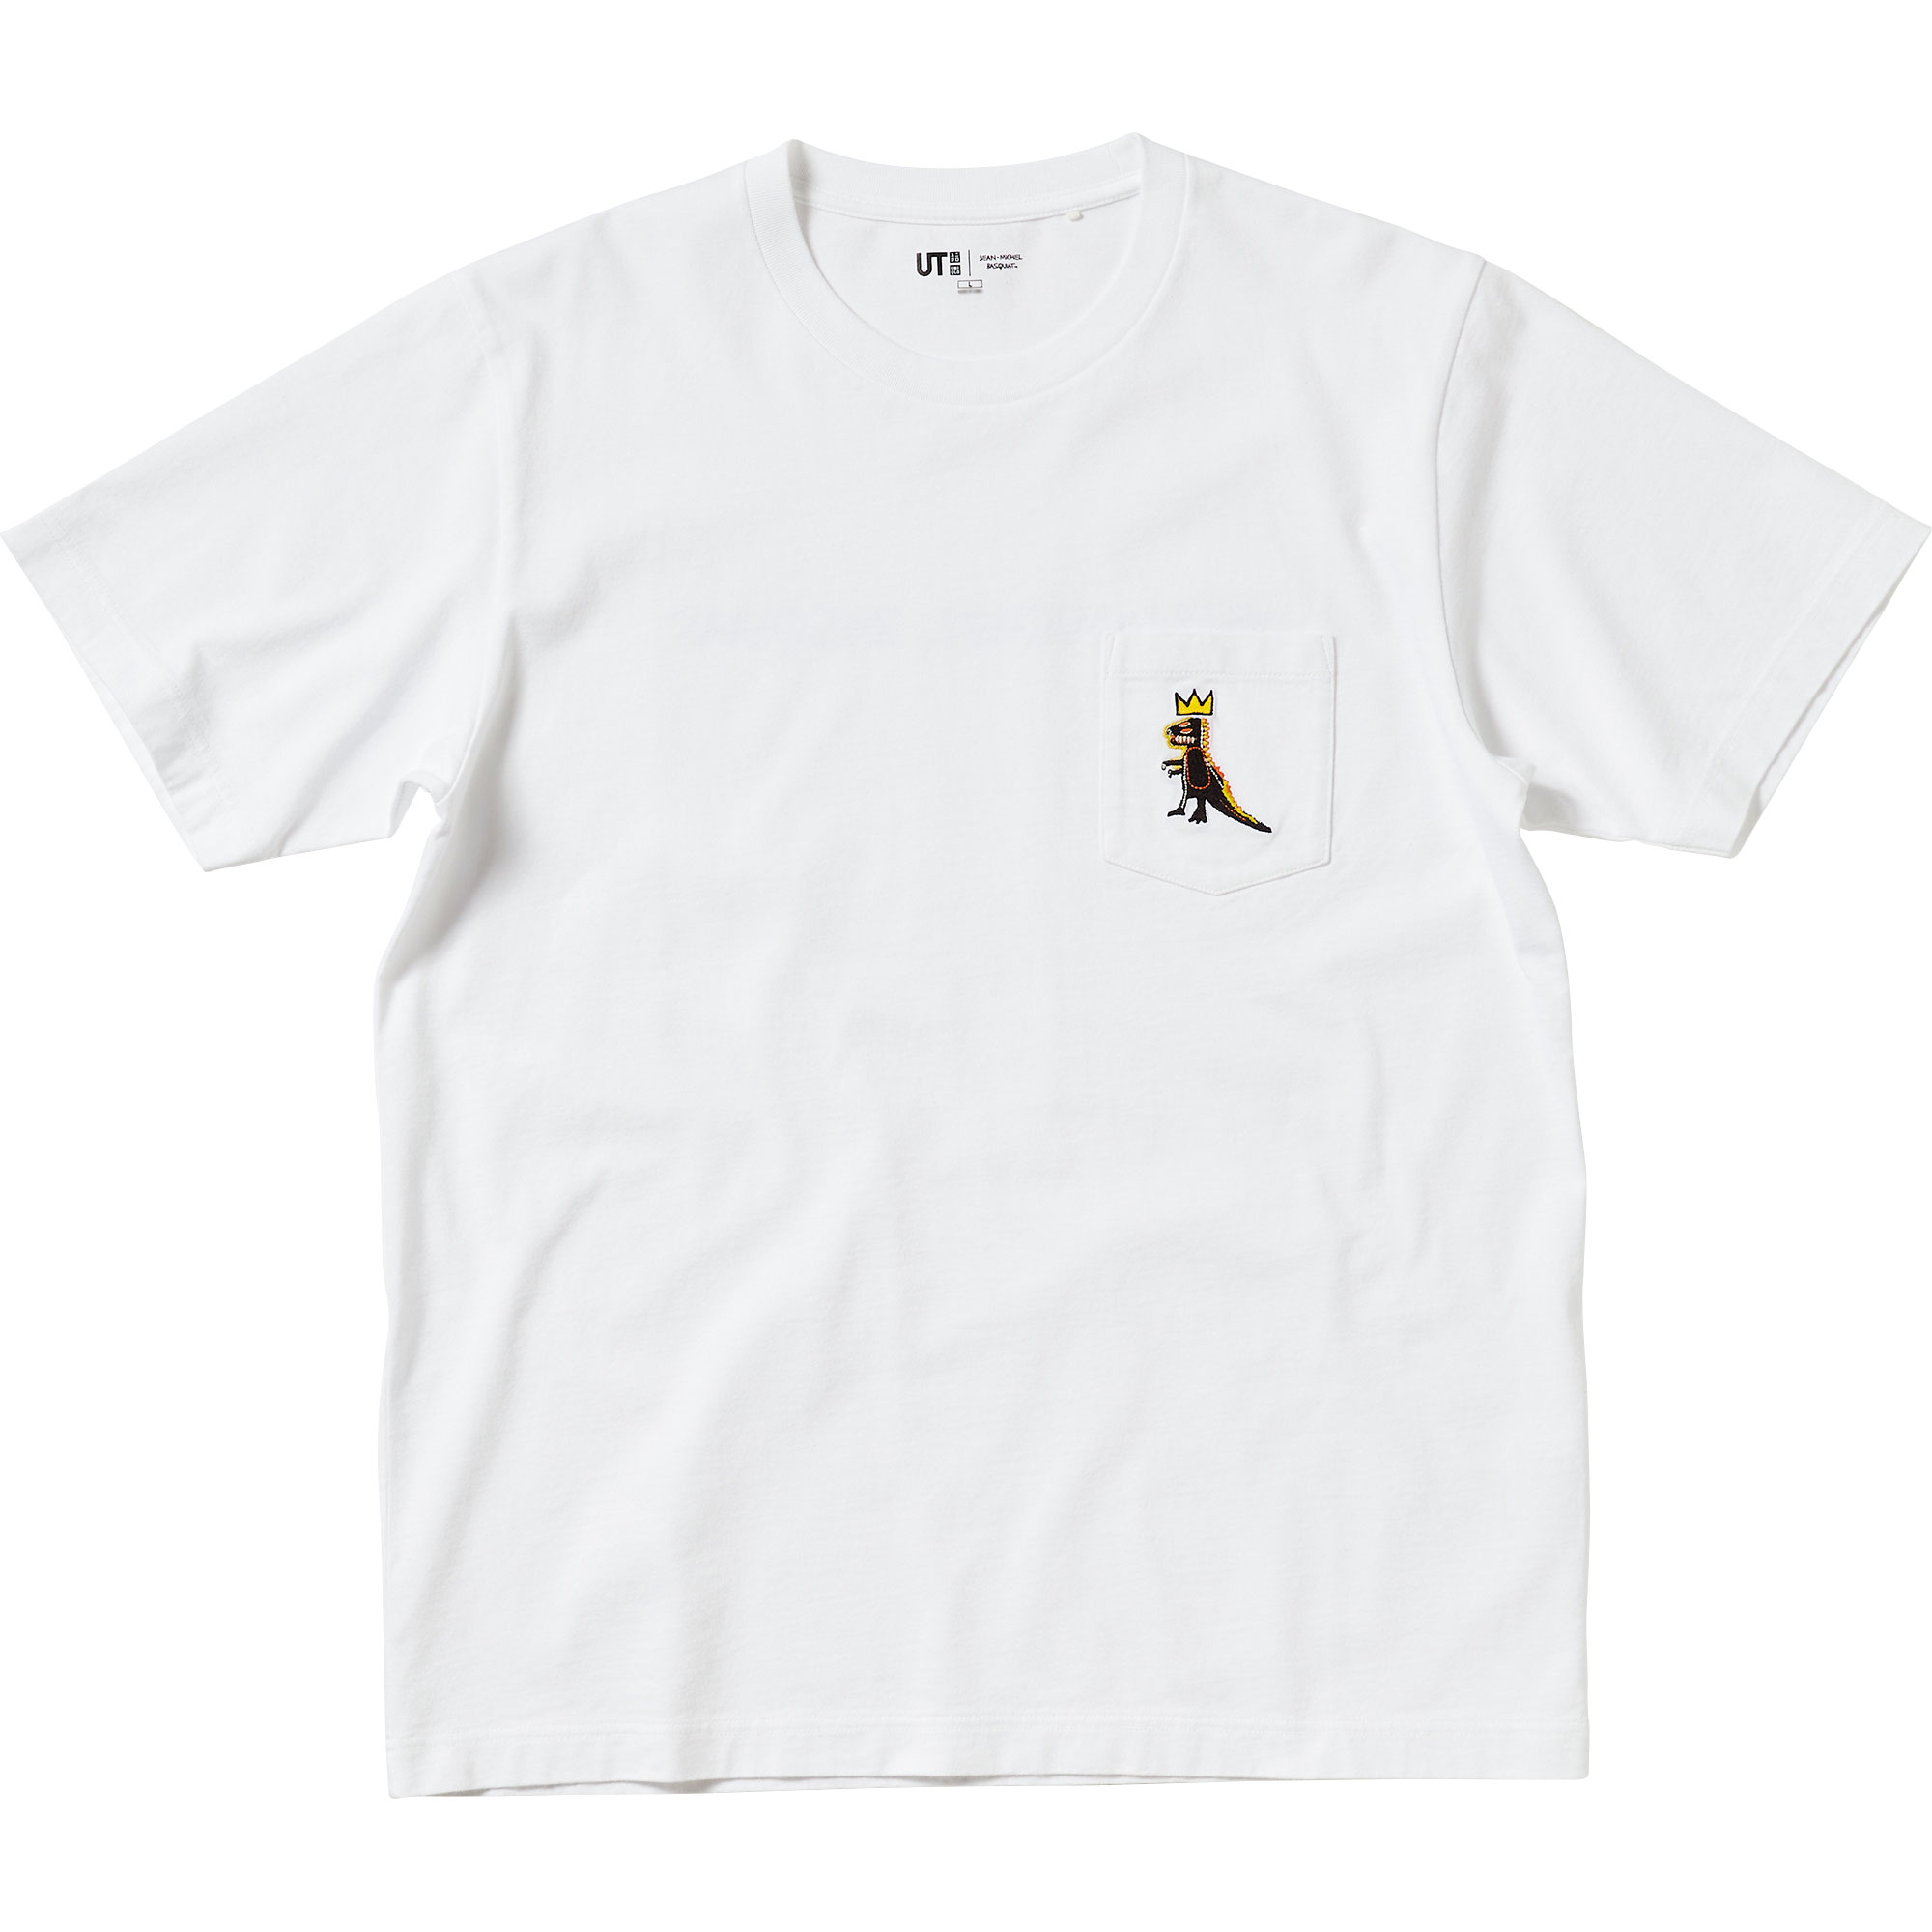 Uniqlo, Jean-Michel Basquiat, T-shirt